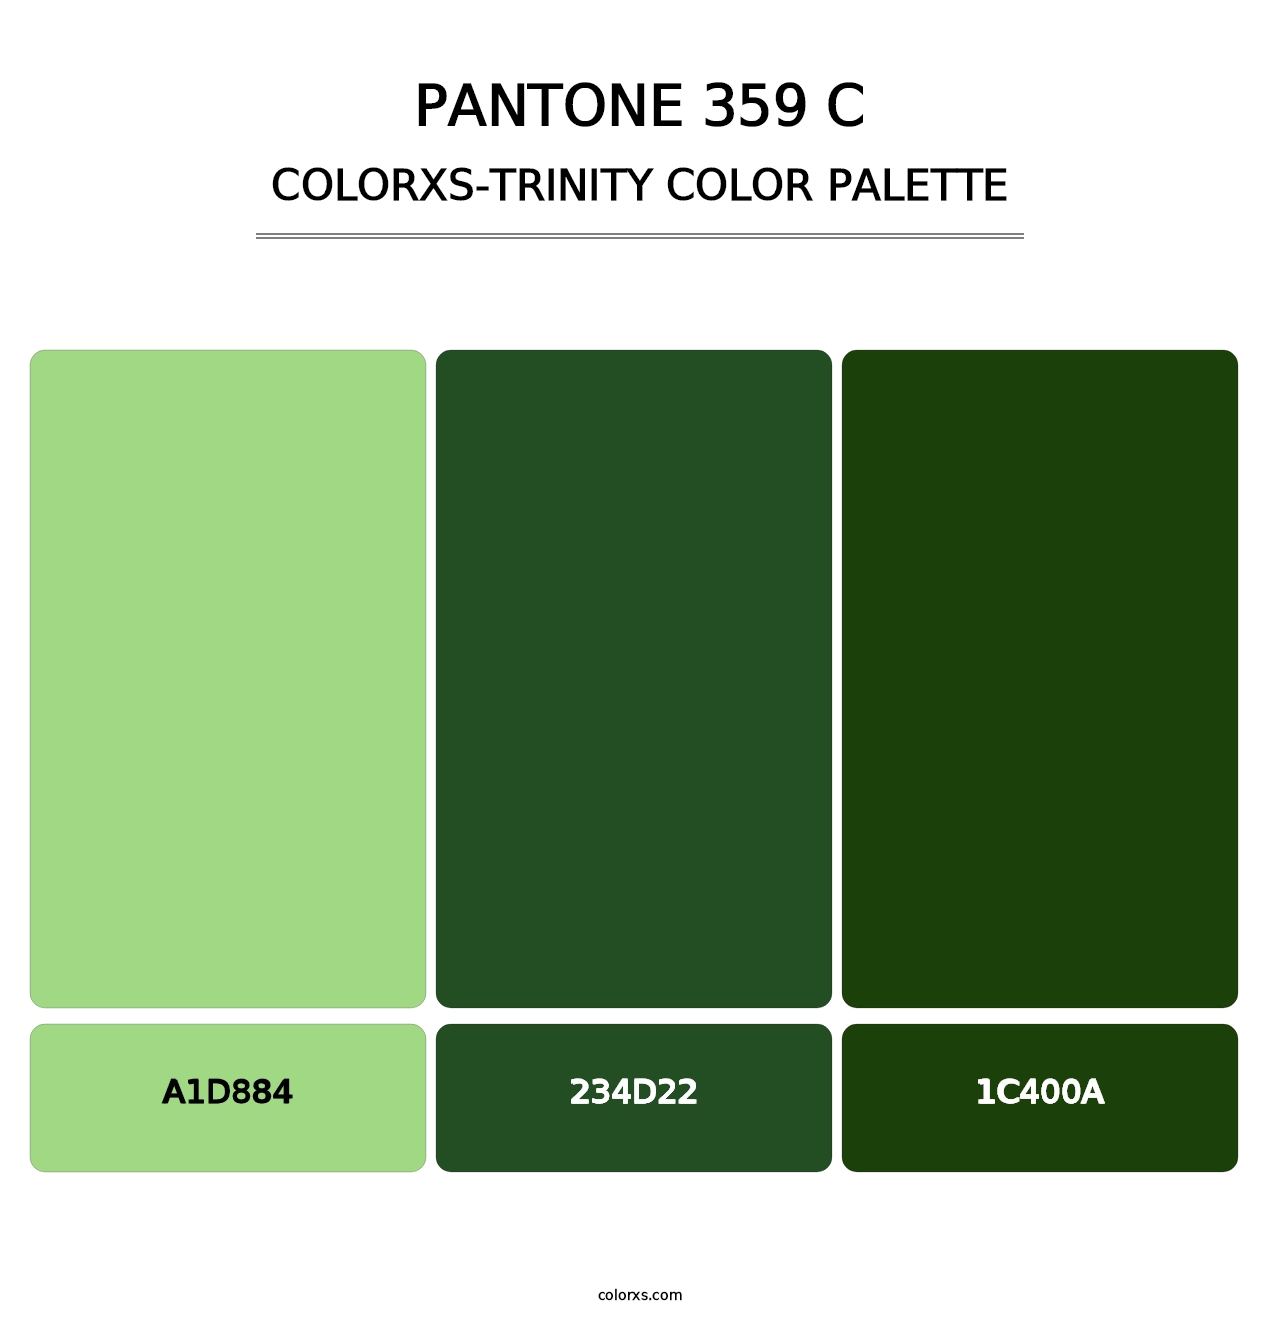 PANTONE 359 C - Colorxs Trinity Palette